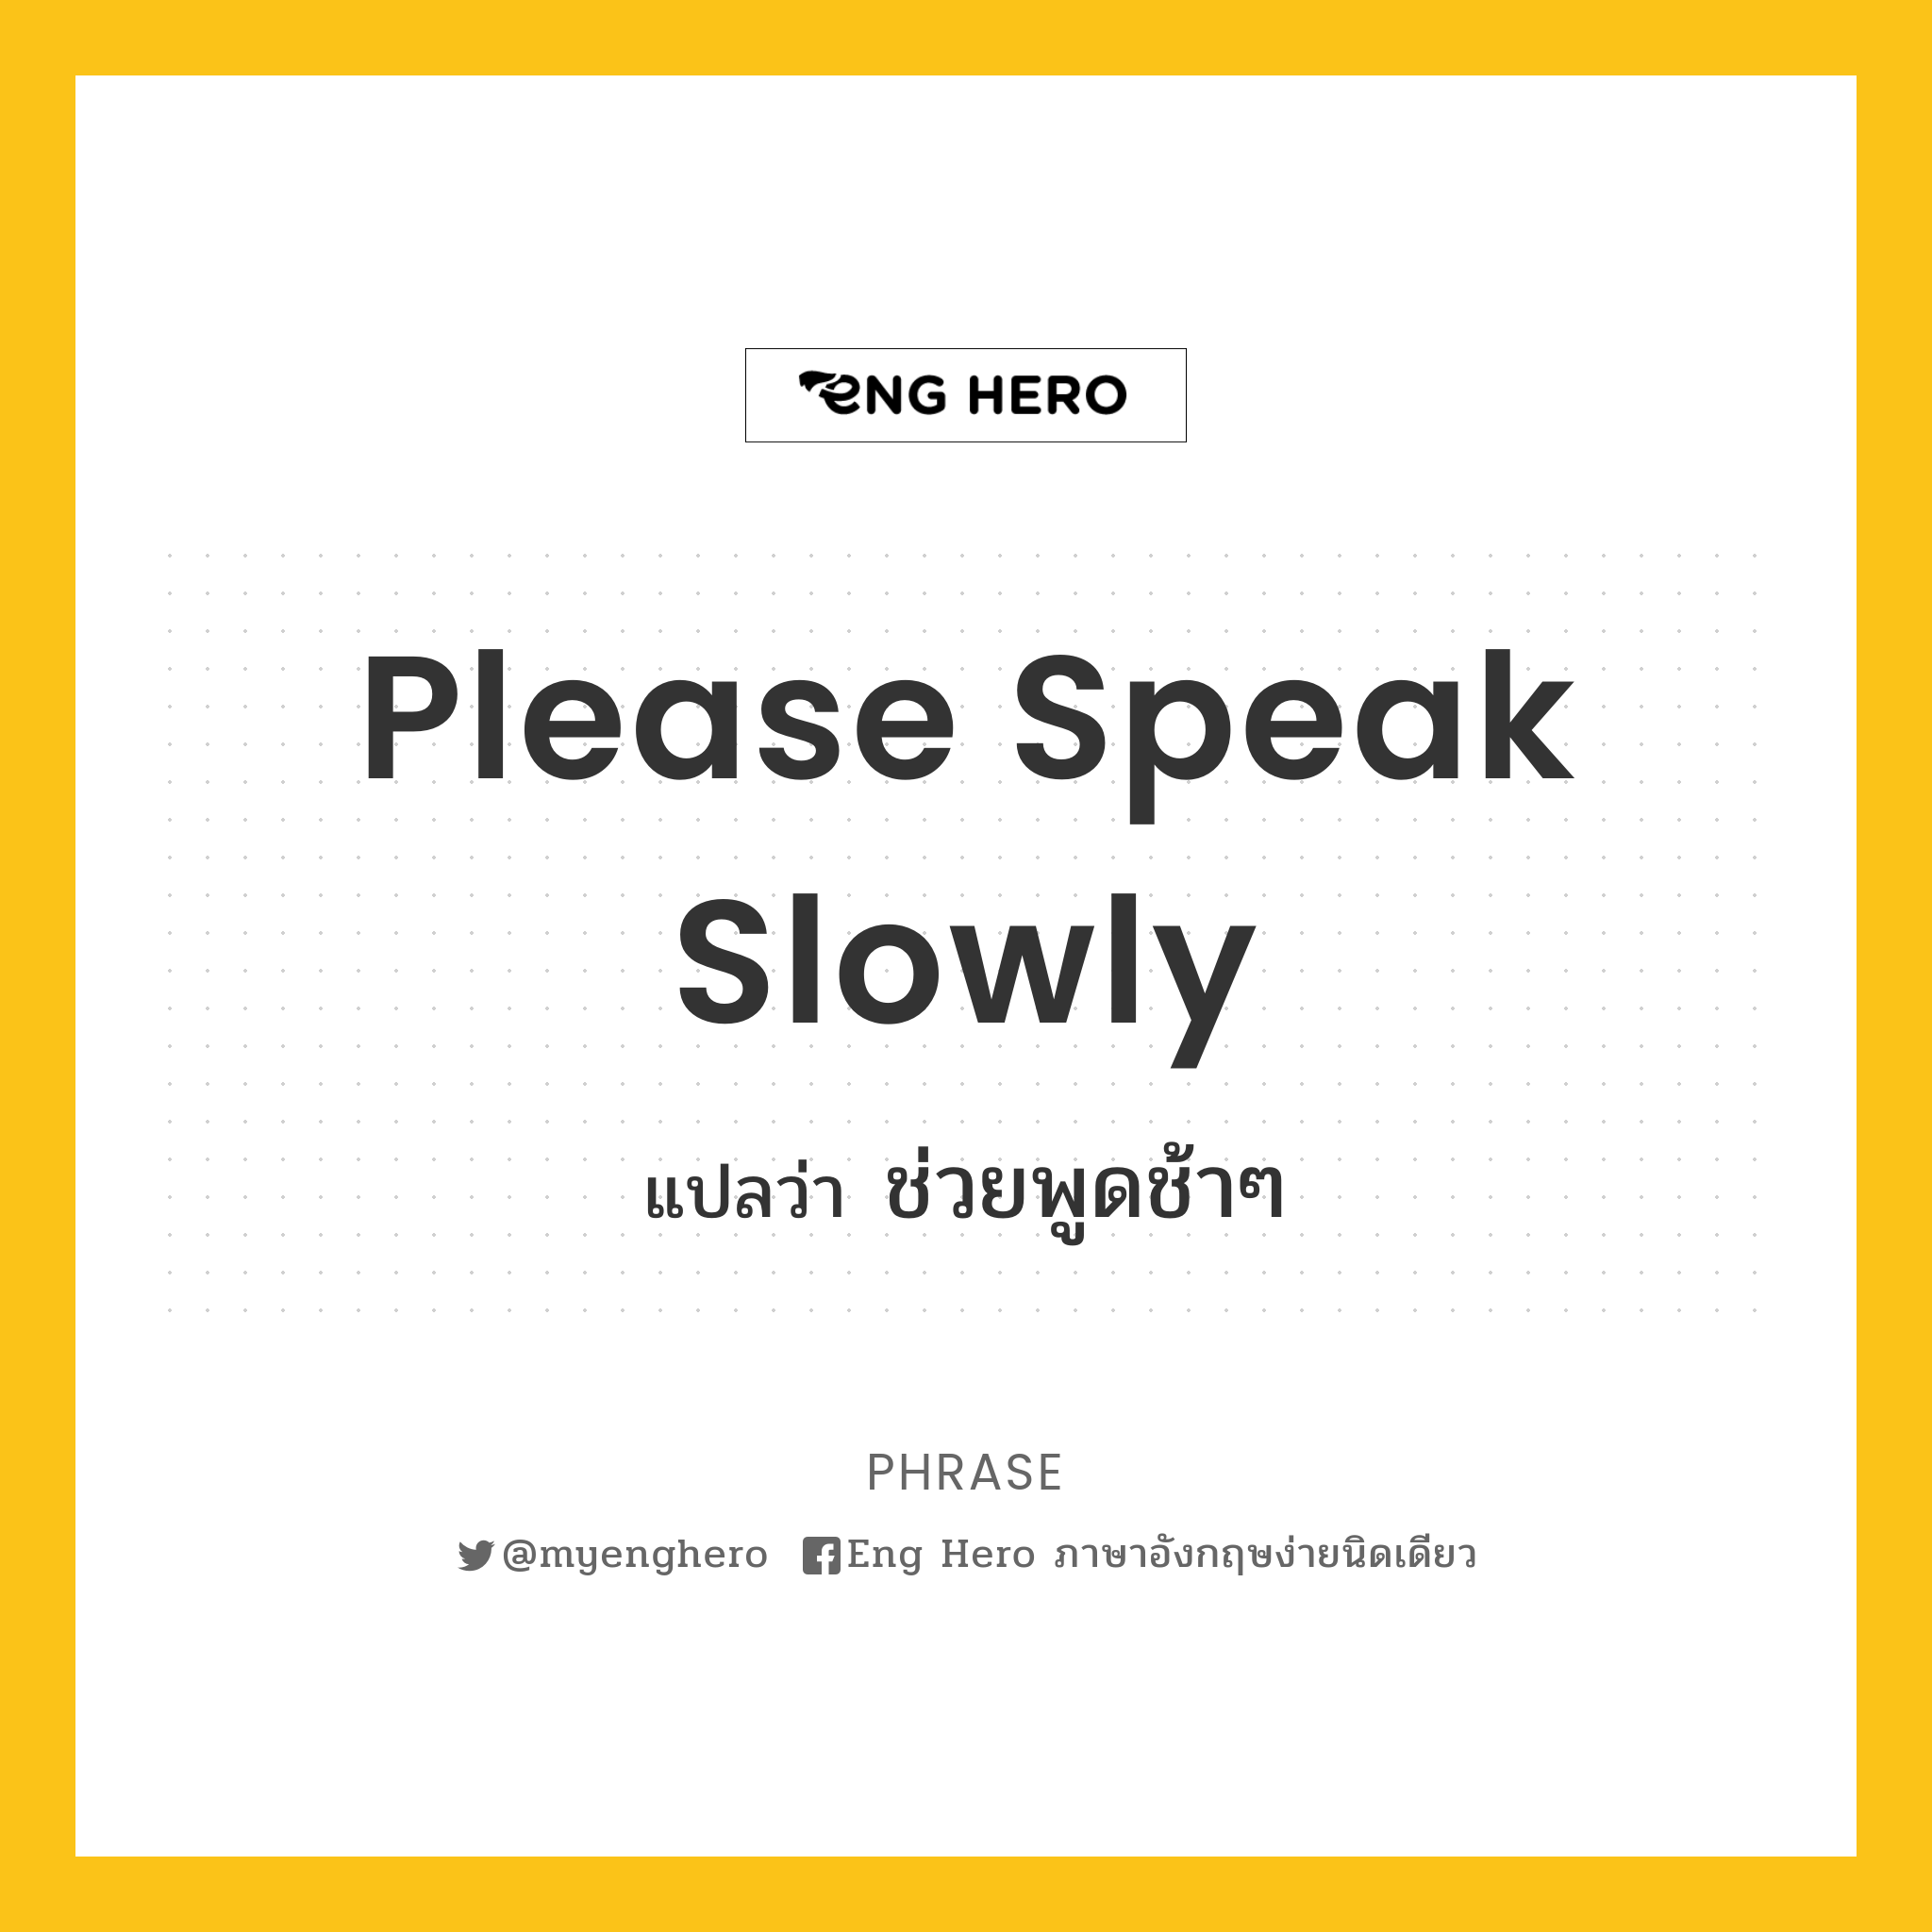 Please speak slowly